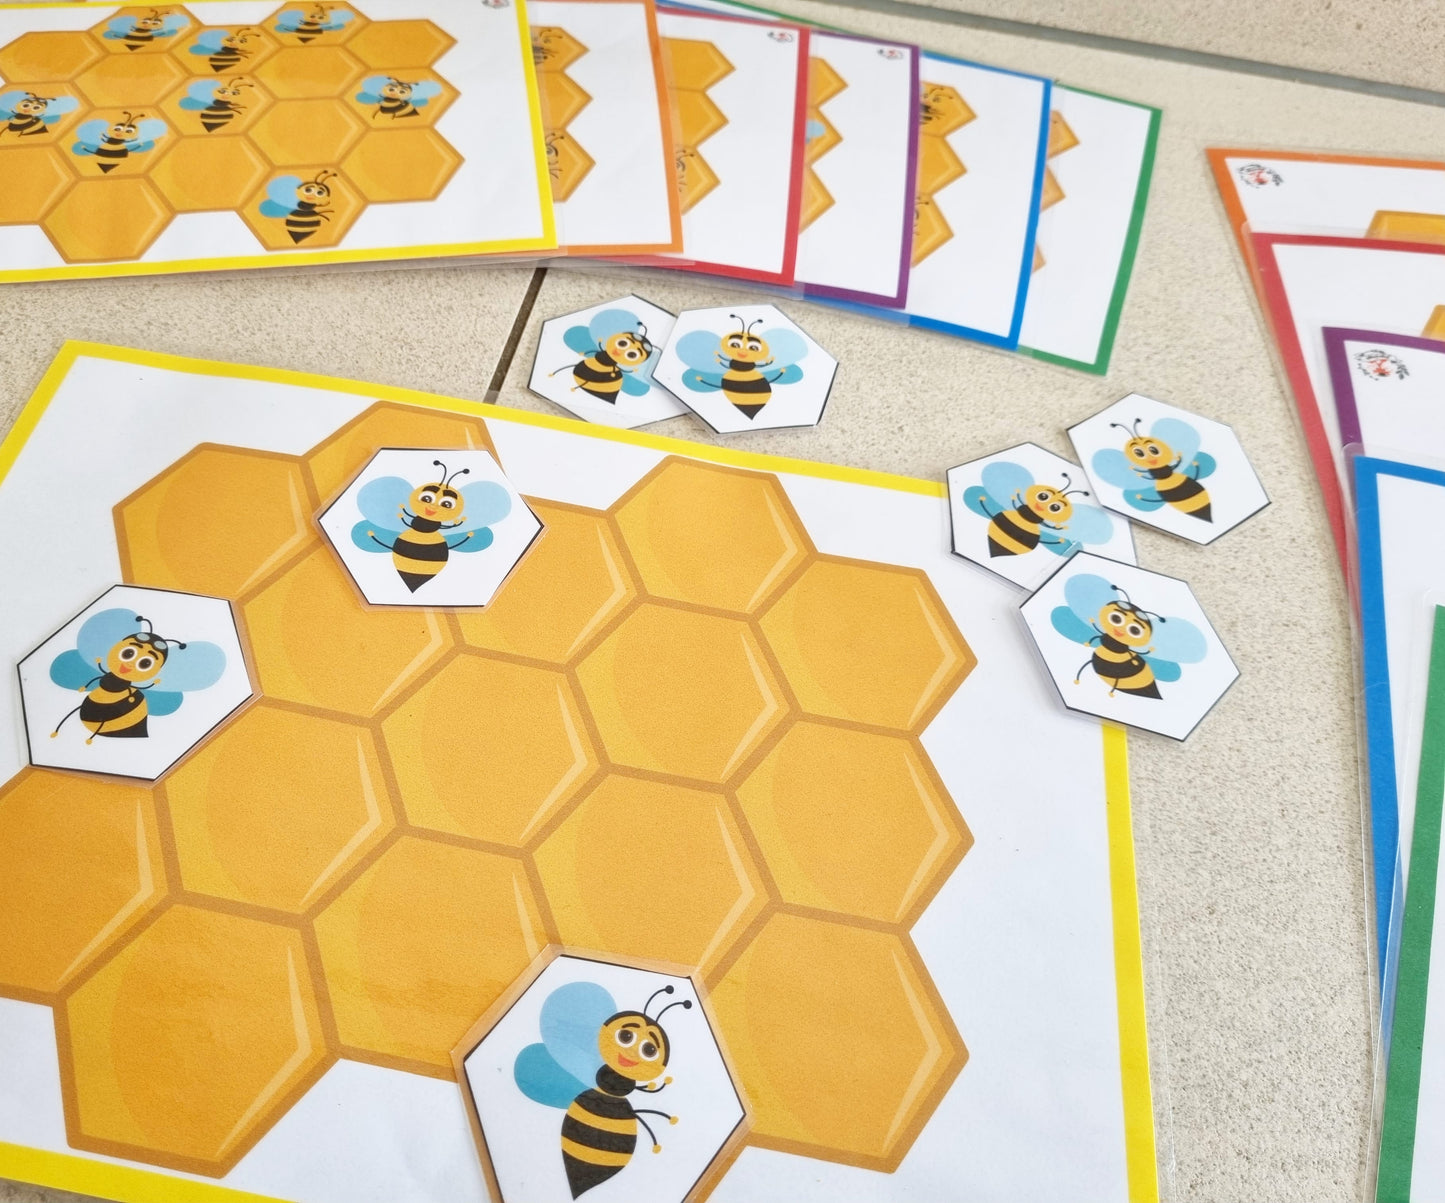 Topologie d'abeille